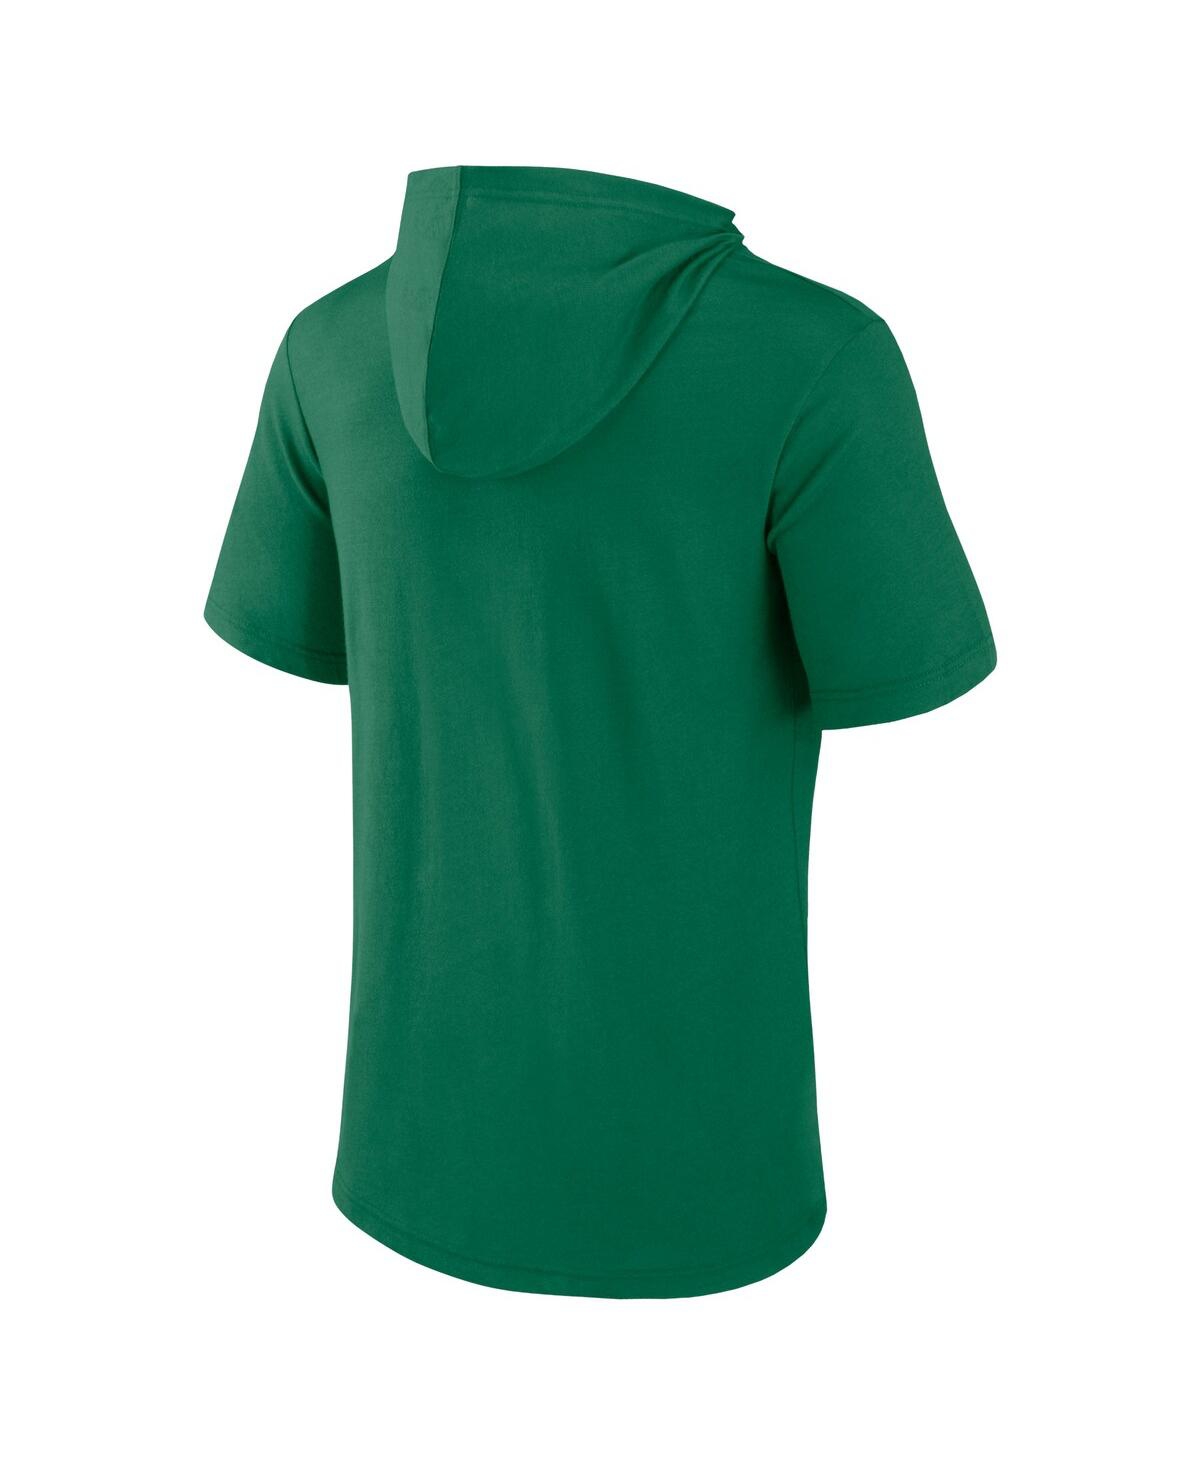 Shop Fanatics Men's  Green Notre Dame Fighting Irish Outline Lower Arch Hoodie T-shirt